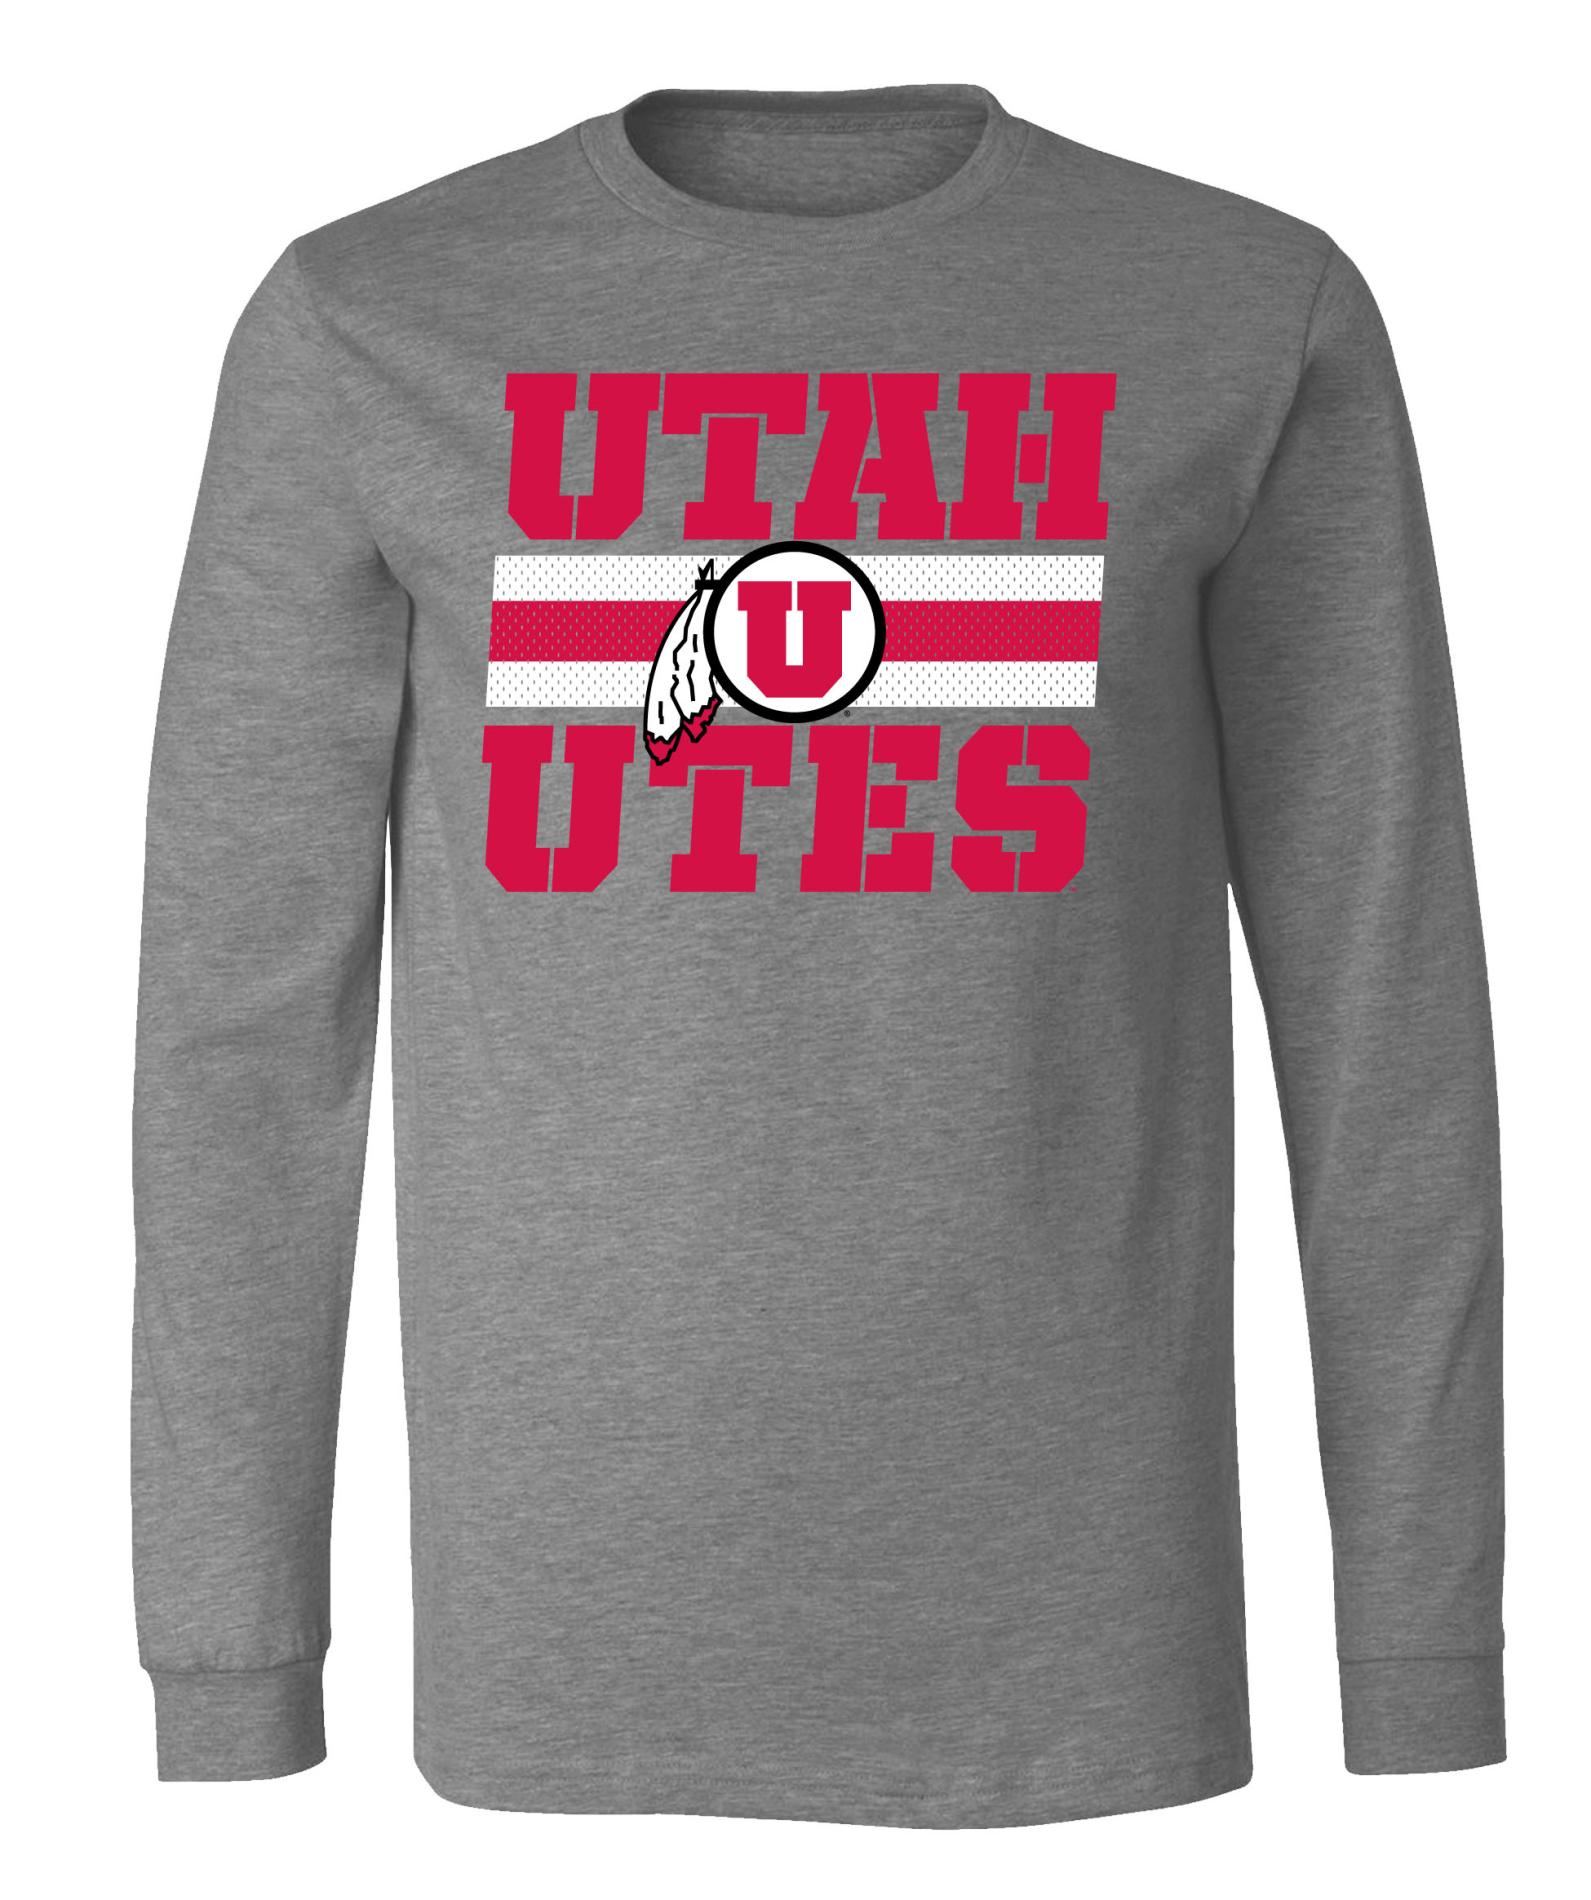 NCAA Boys' Long-Sleeve T-Shirt - Utah Utes